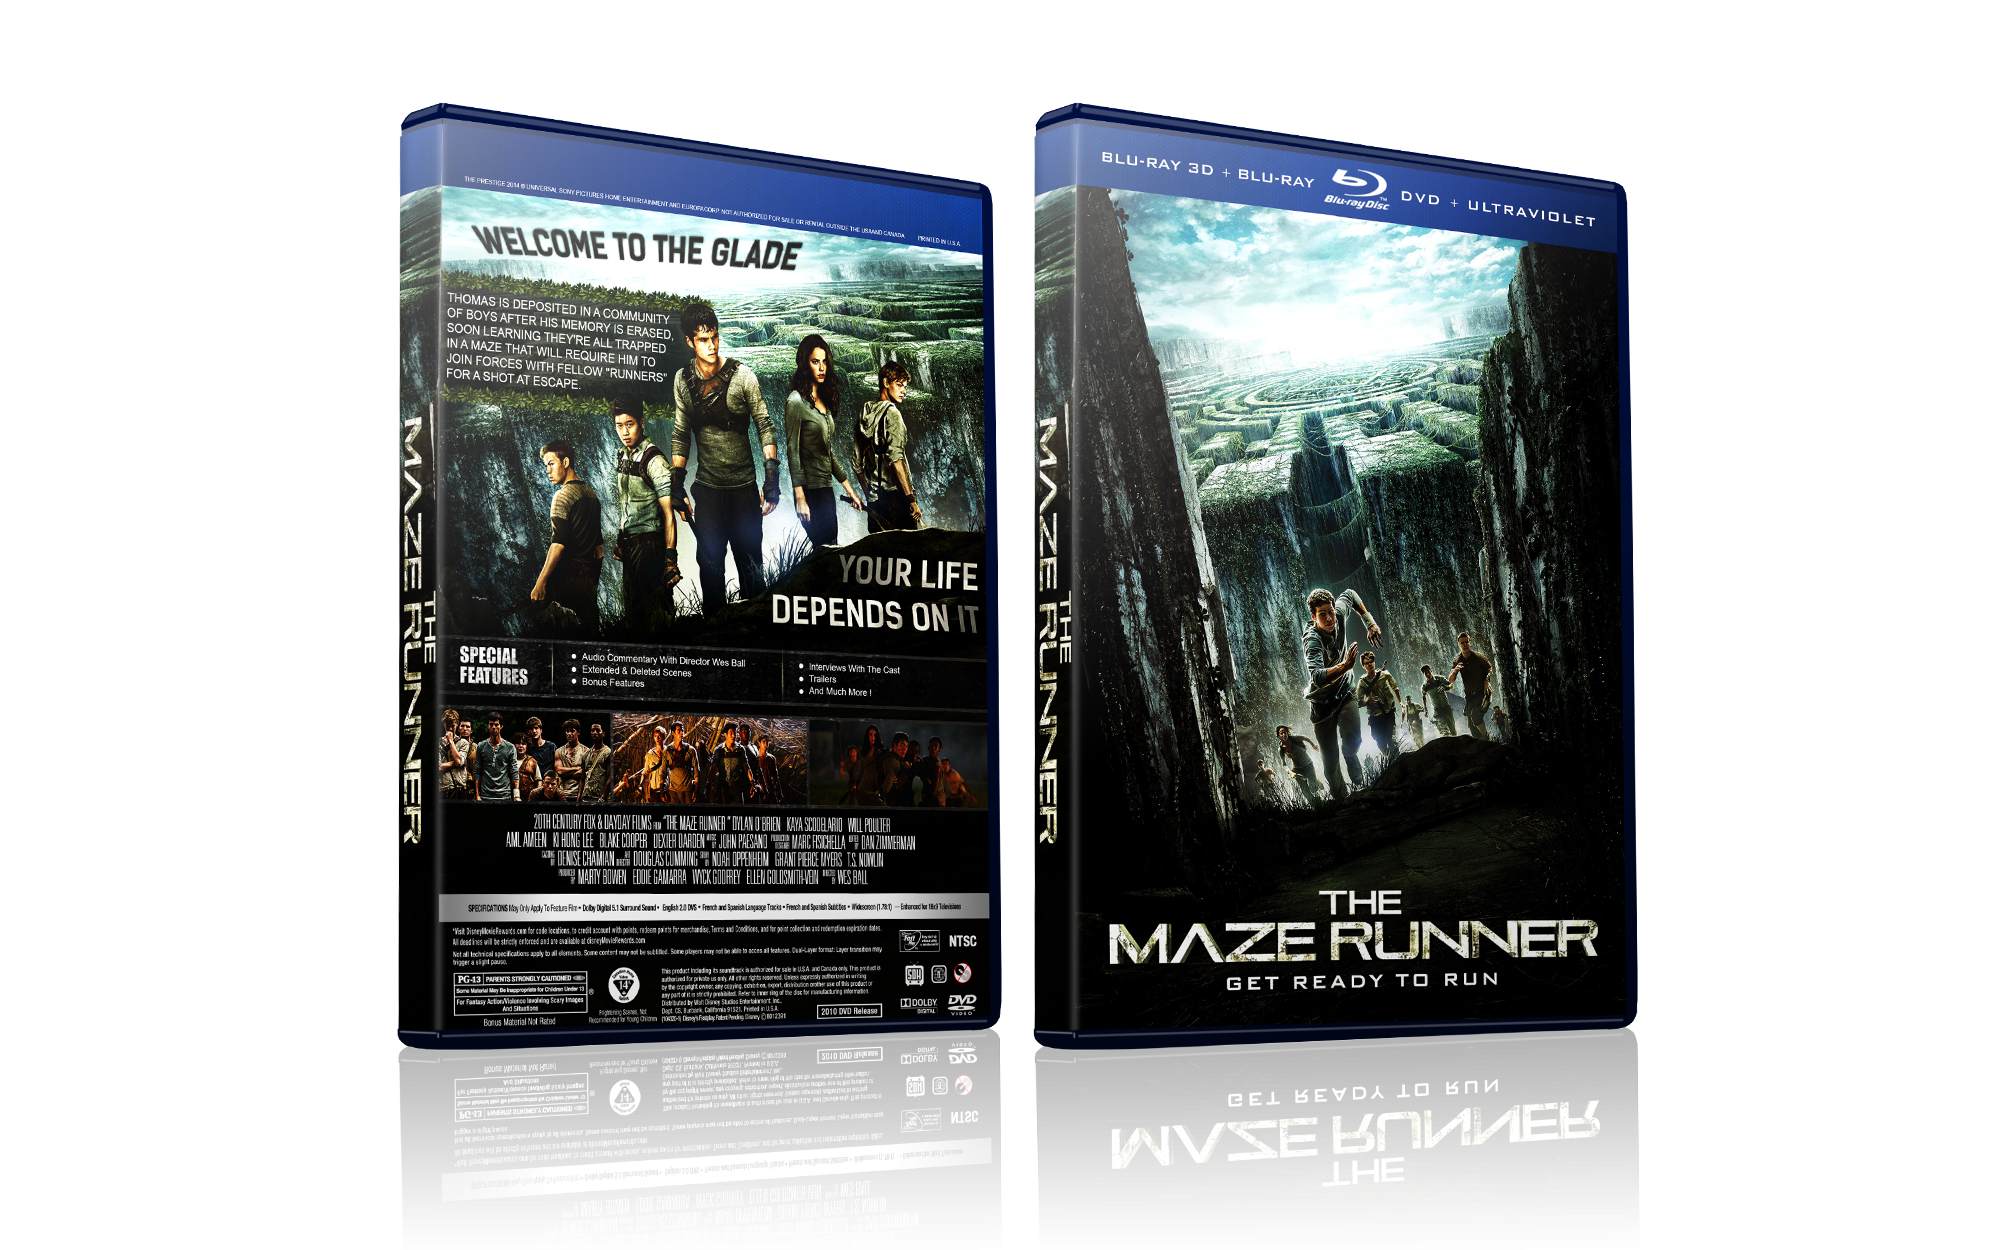 The Maze Runner box cover